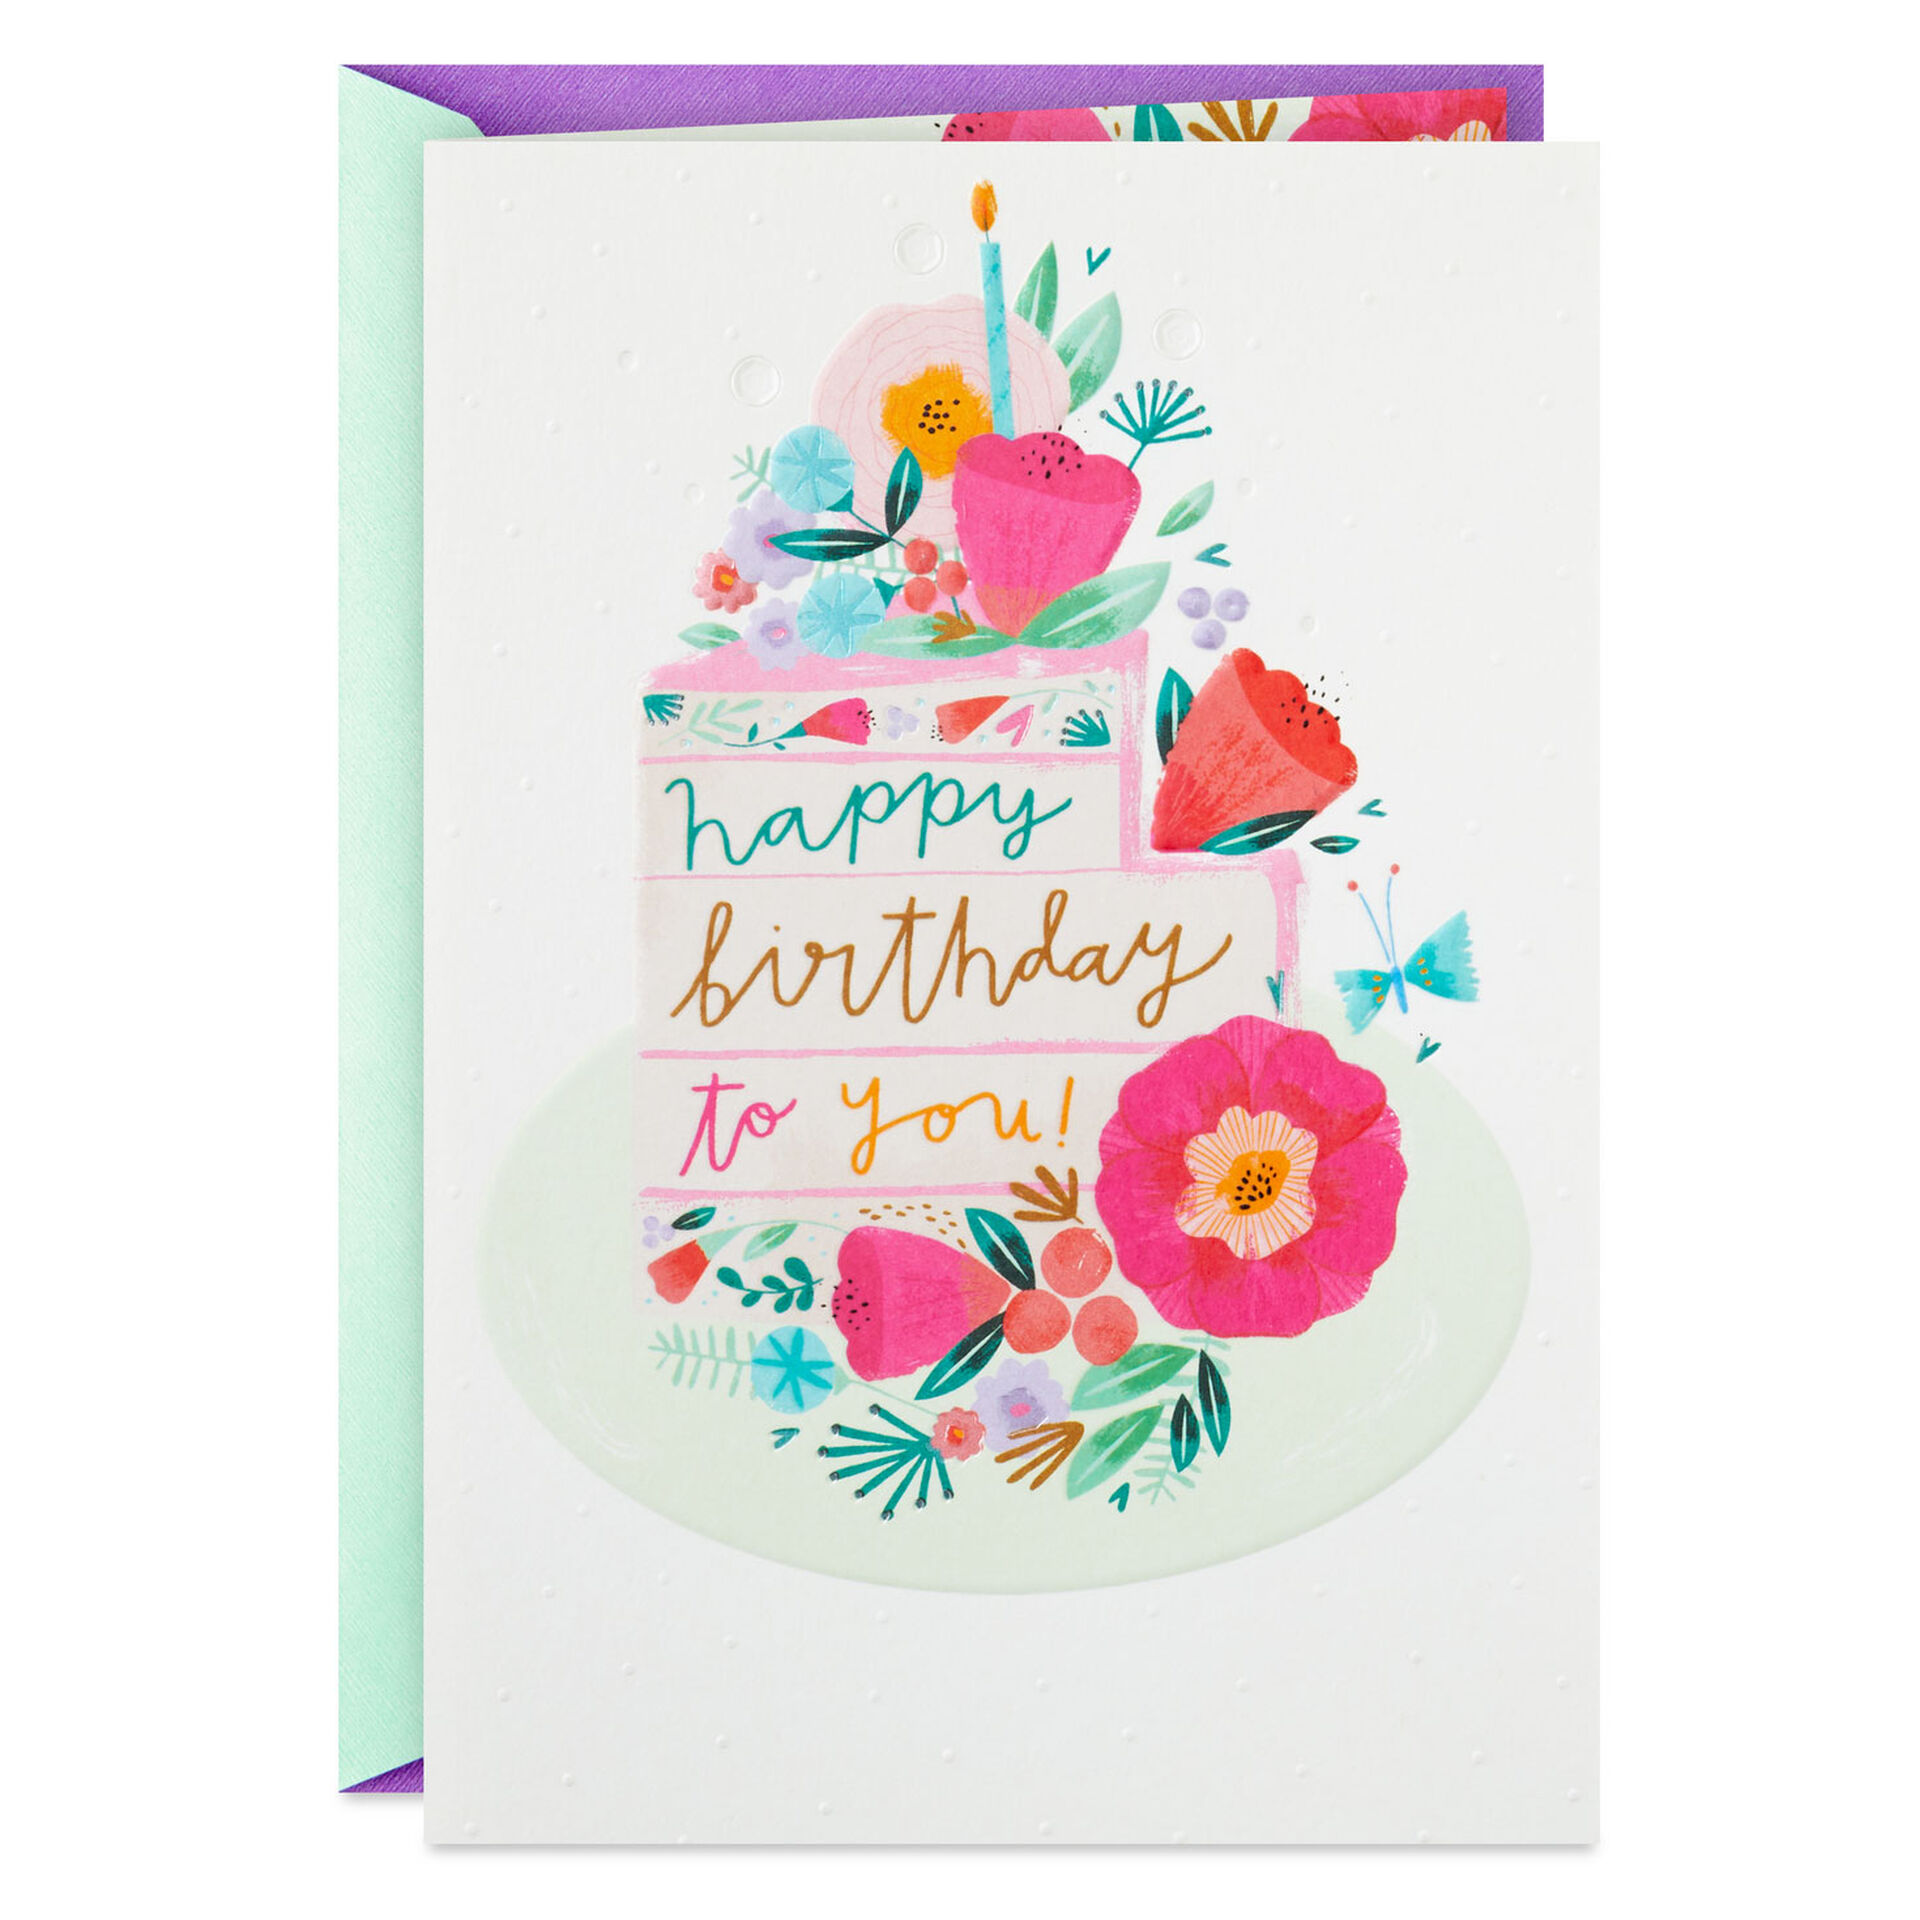 Fancy-Flowers-Birthday-Cake-Birthday-Card-for-Her_459HBD4534_01